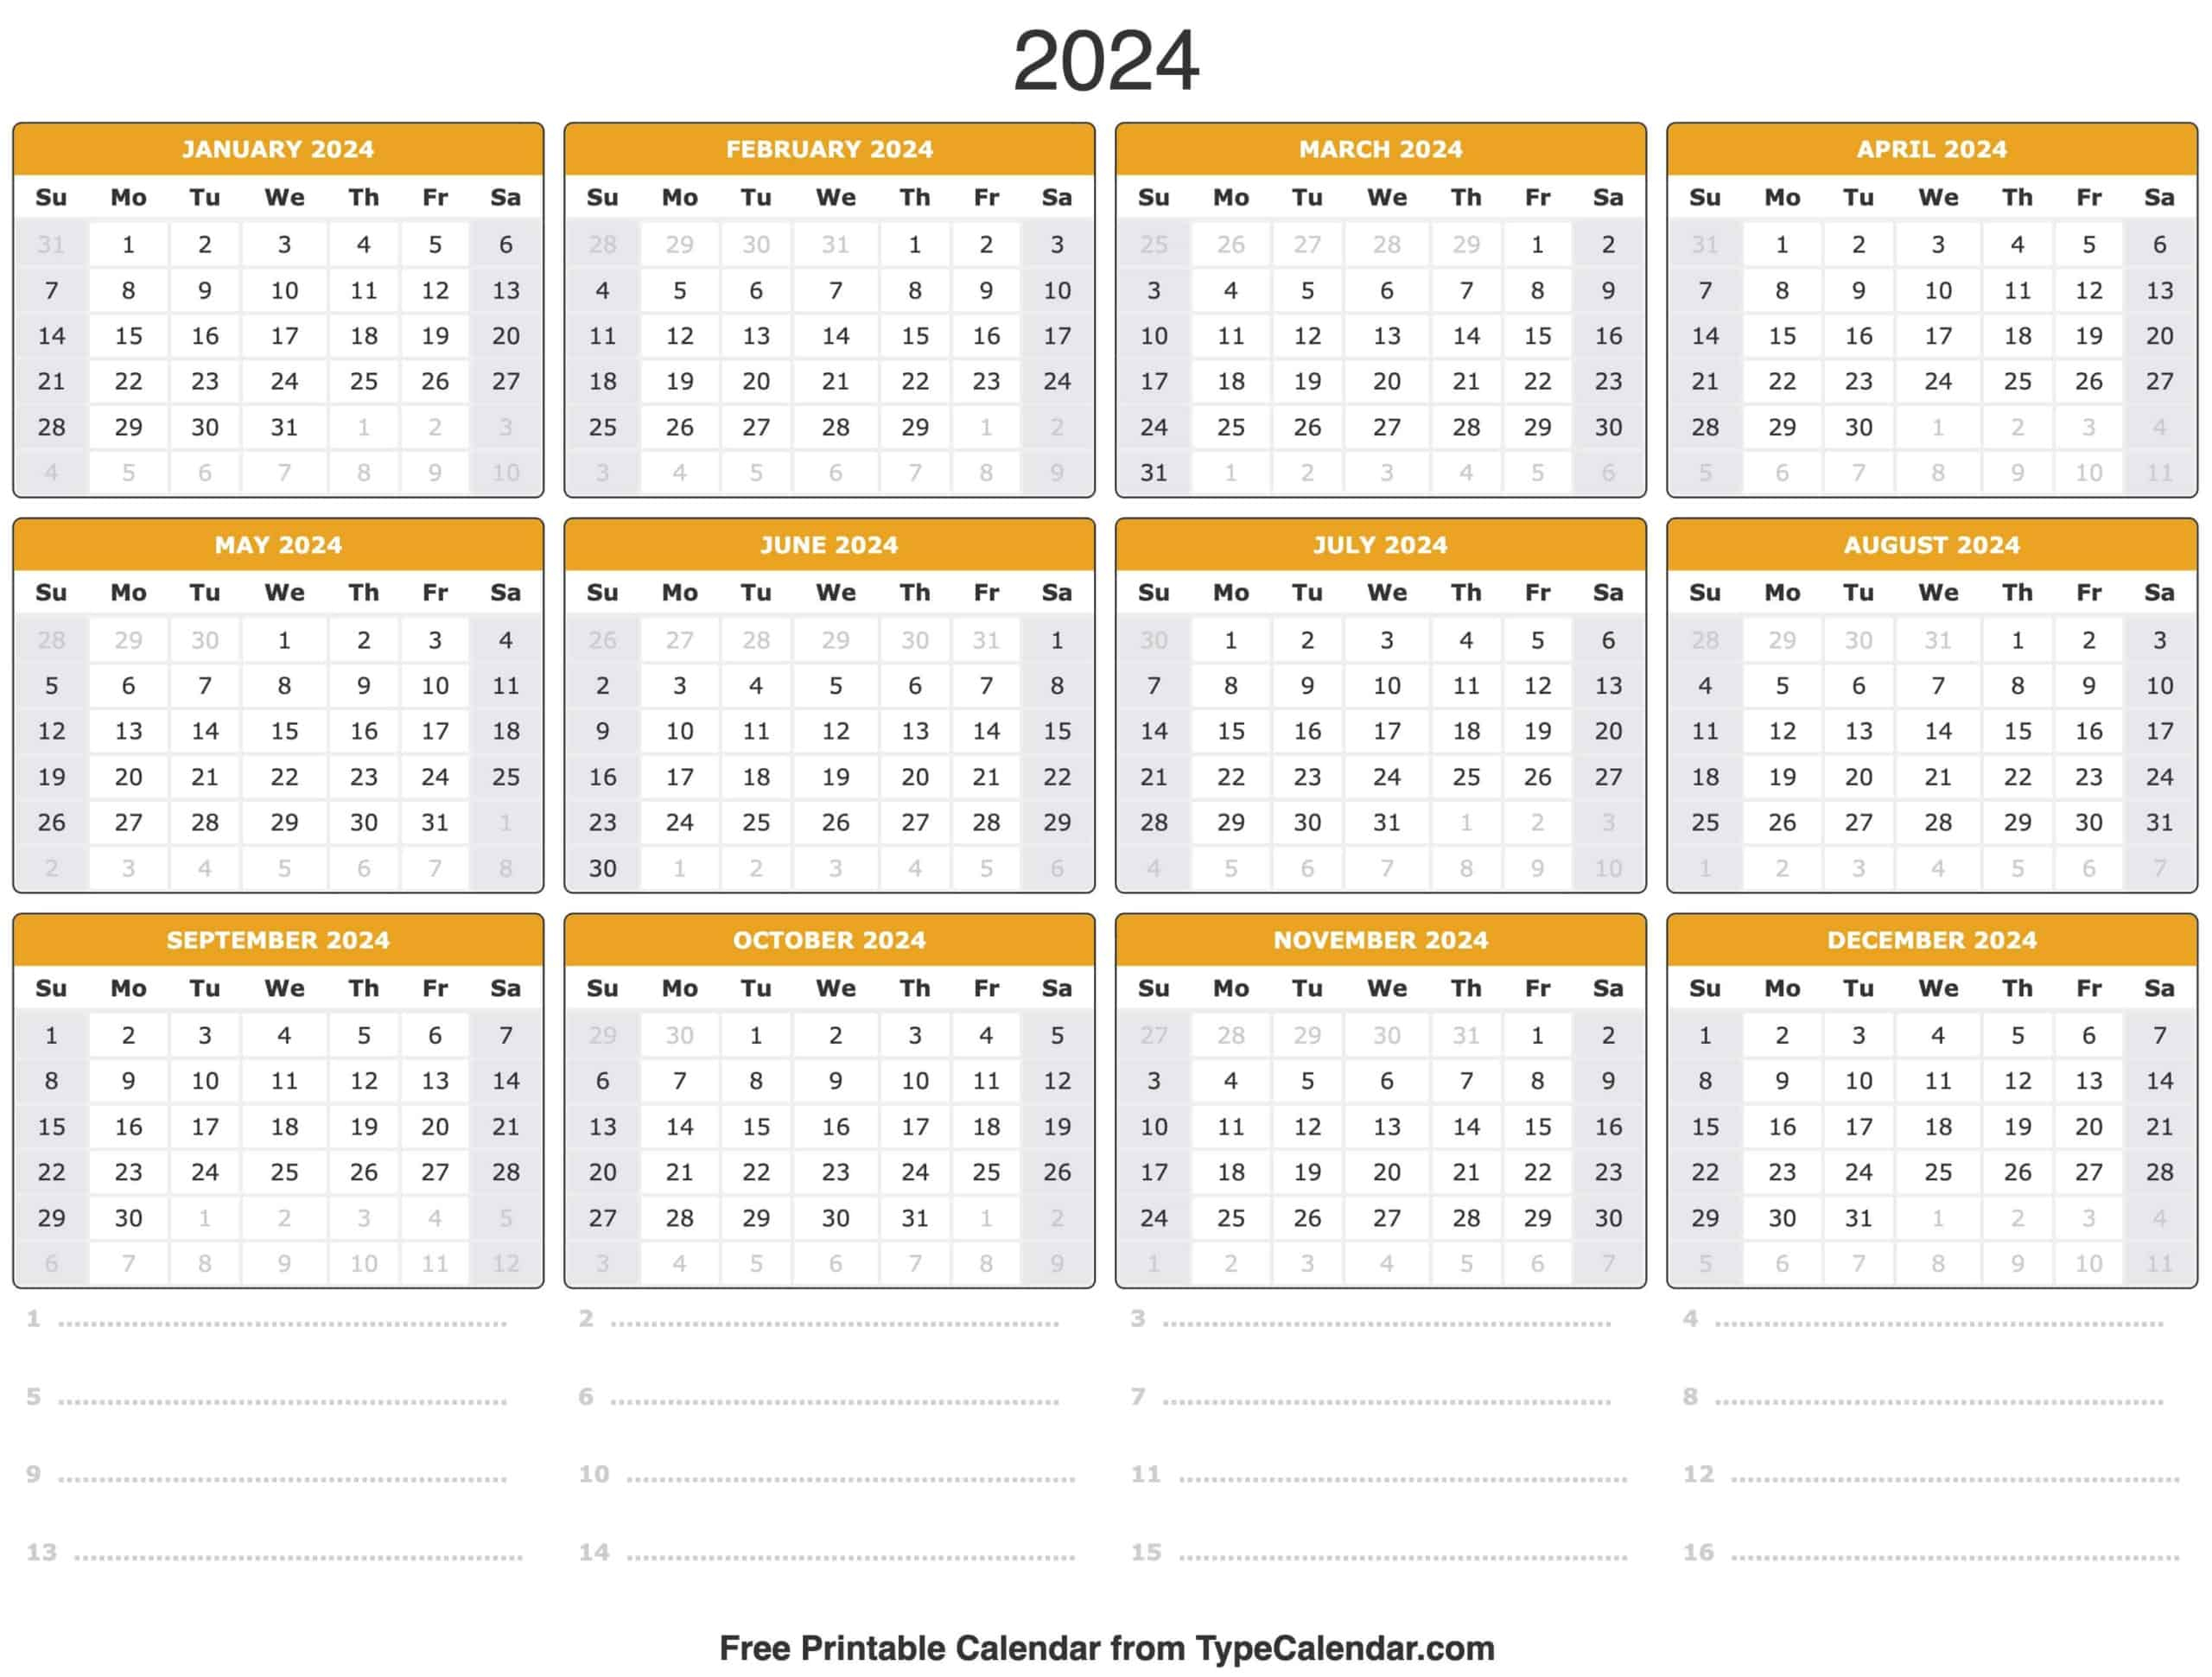 2024 Calendar: Free Printable Calendar With Holidays | Free Downloadable 2024 Calendars